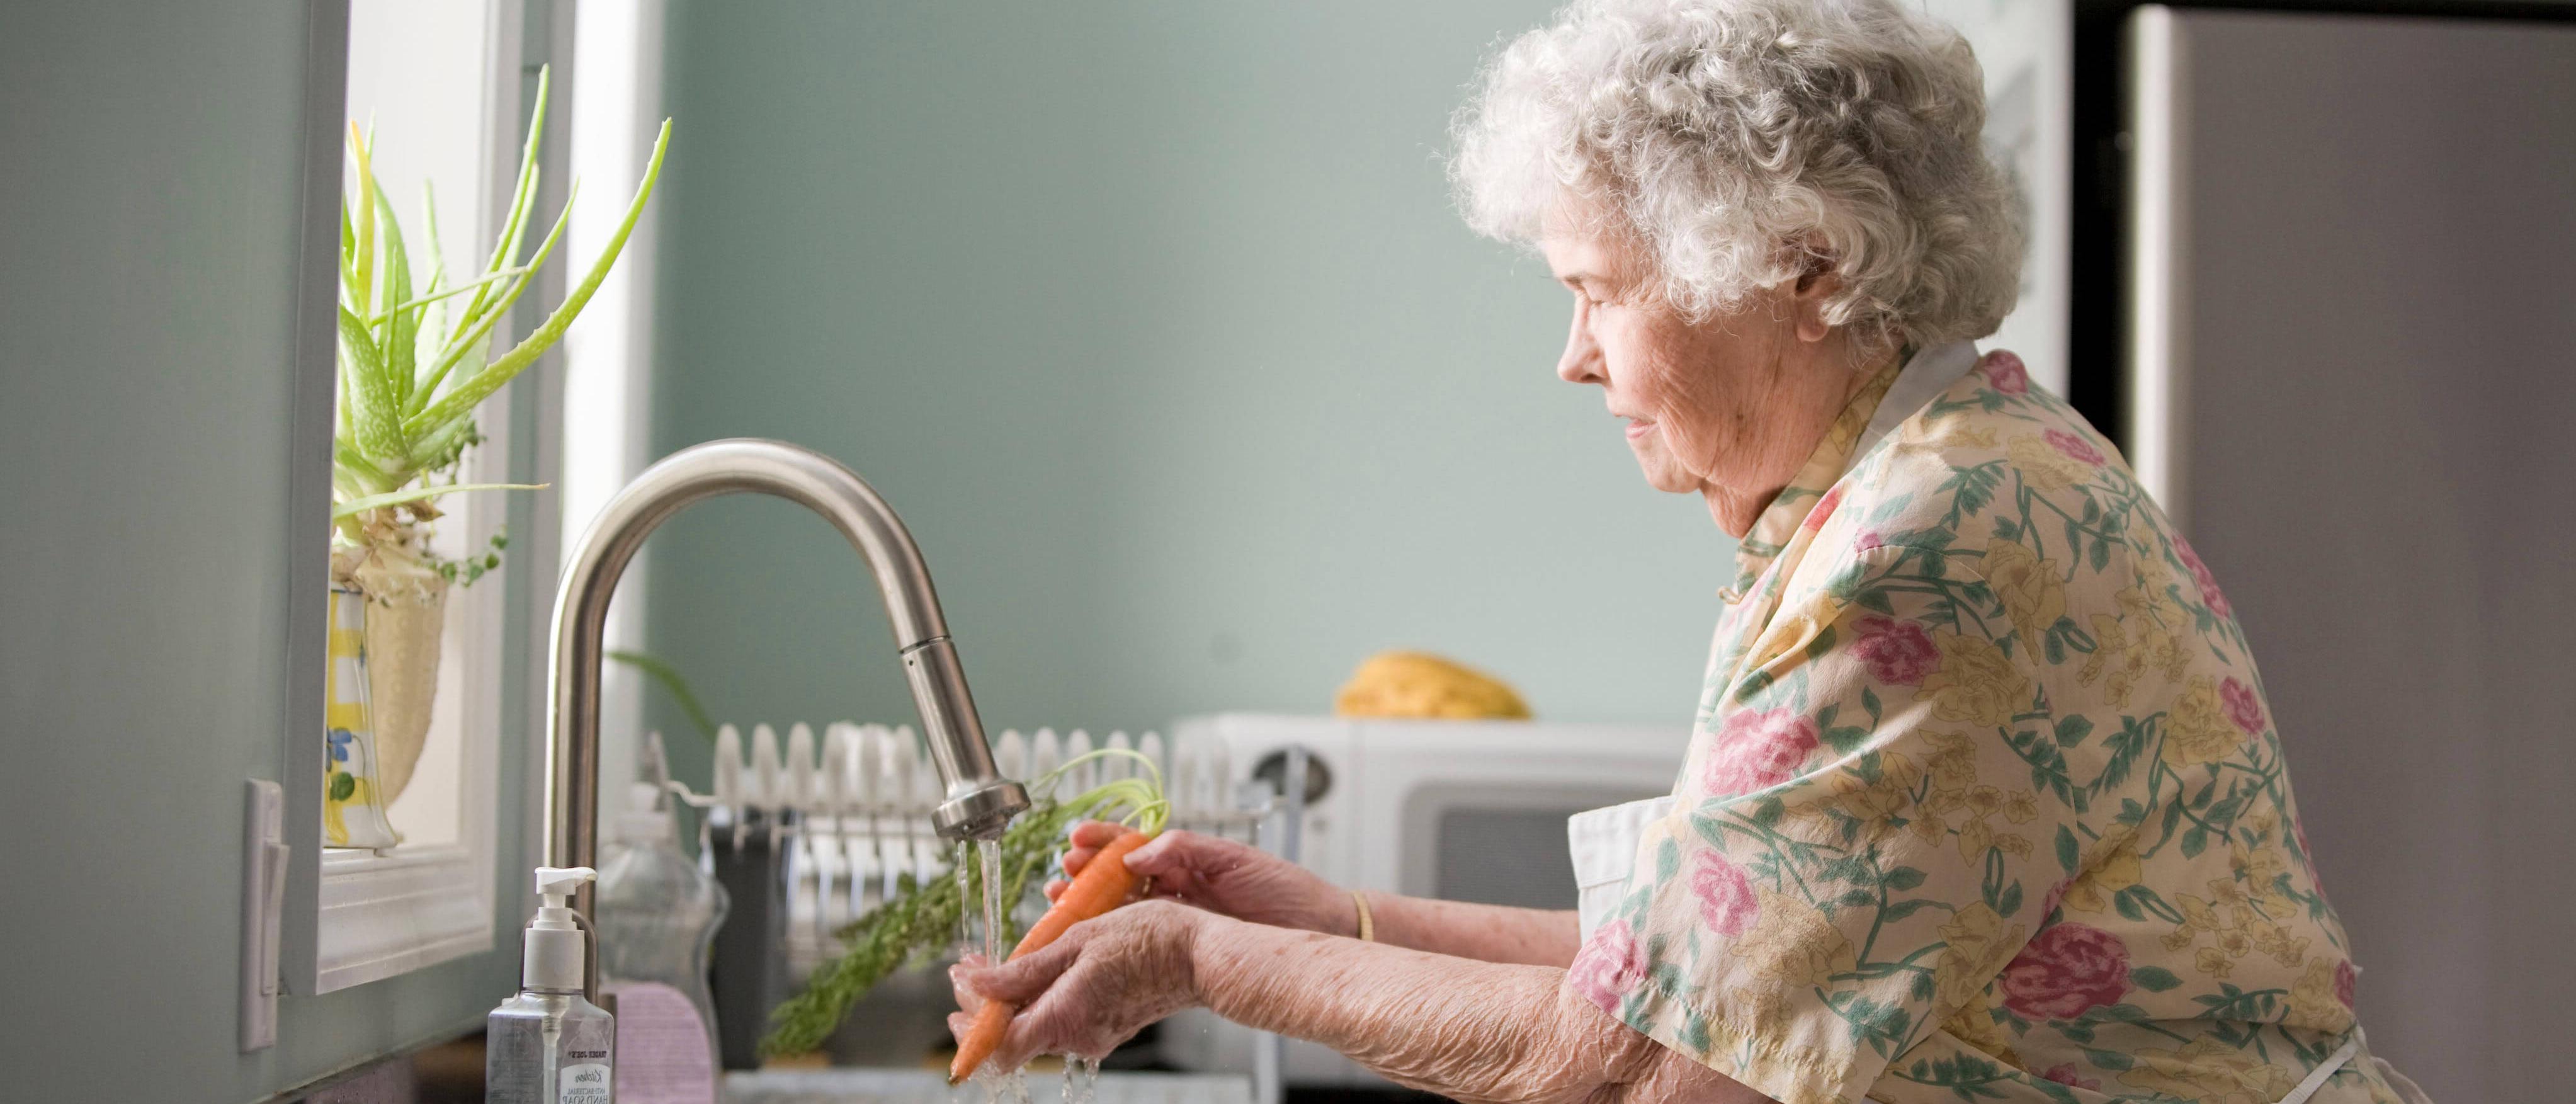 Woman cleaning veggies